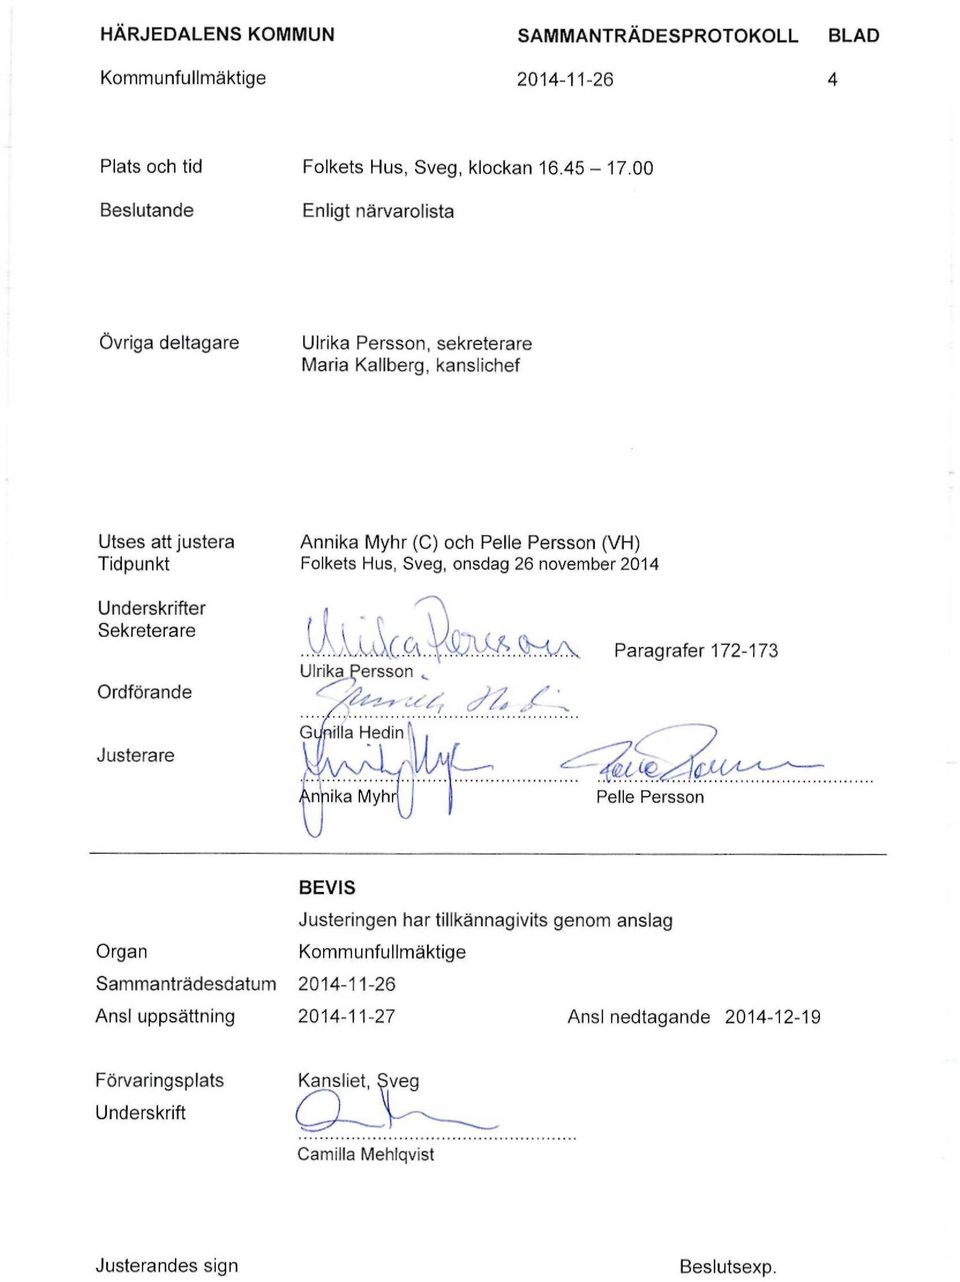 (C) och Pelle Persson (VH) Folkets Hus, Sveg, onsdag 26 november 2014. A.\AAAAC. StrdA, Paragrafer 172-173 Ulrika Persson v Gi/nilla Hedin \ K/A A / \ 1 z * / t.